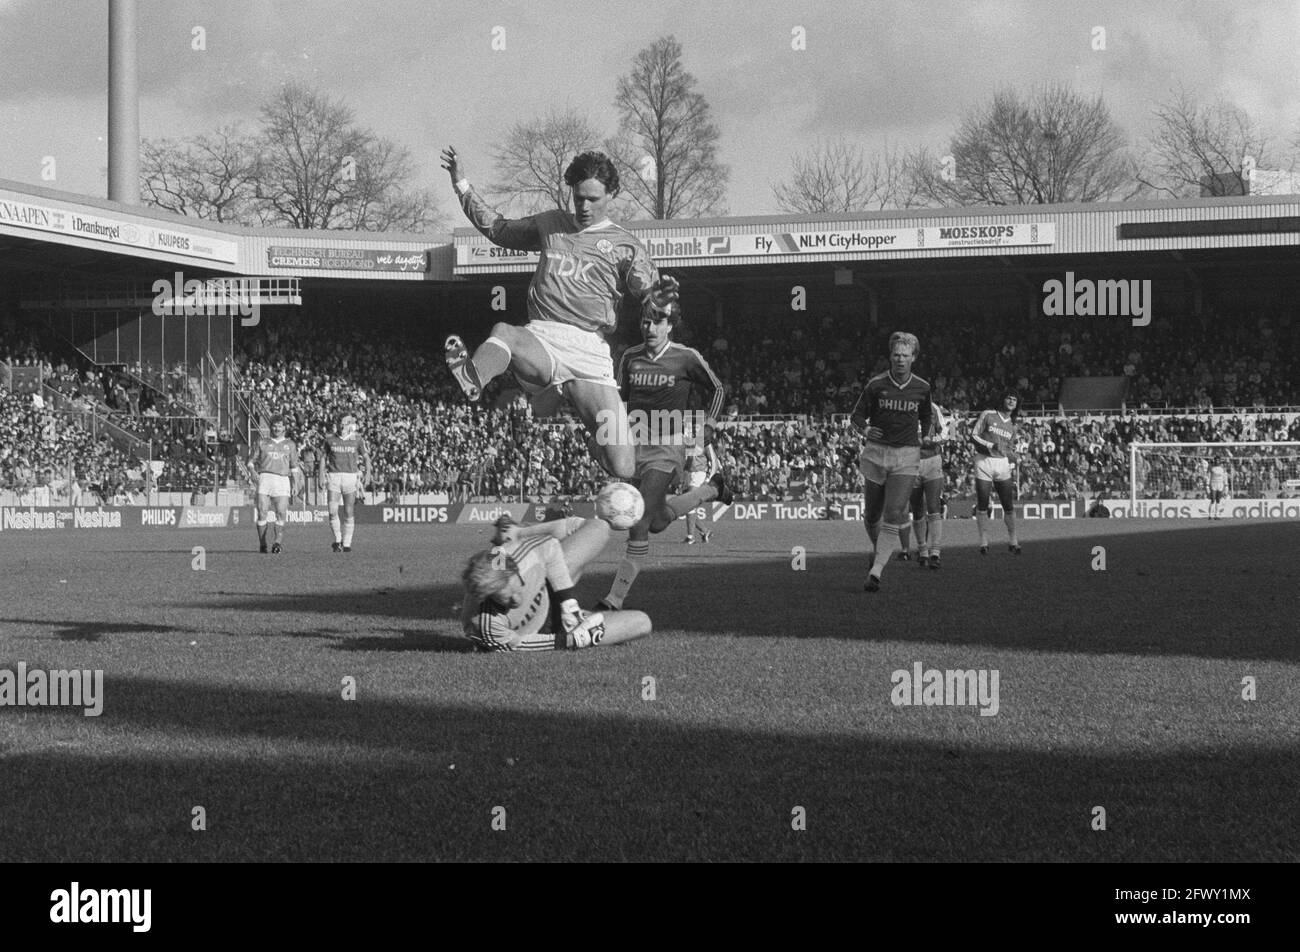 PSV against Ajax 1-0; Van Basten jumps over goalkeeper Van Breukelen, March 29, 1987, goalkeepers, sports, soccer, The Netherlands, 20th century press Stock Photo